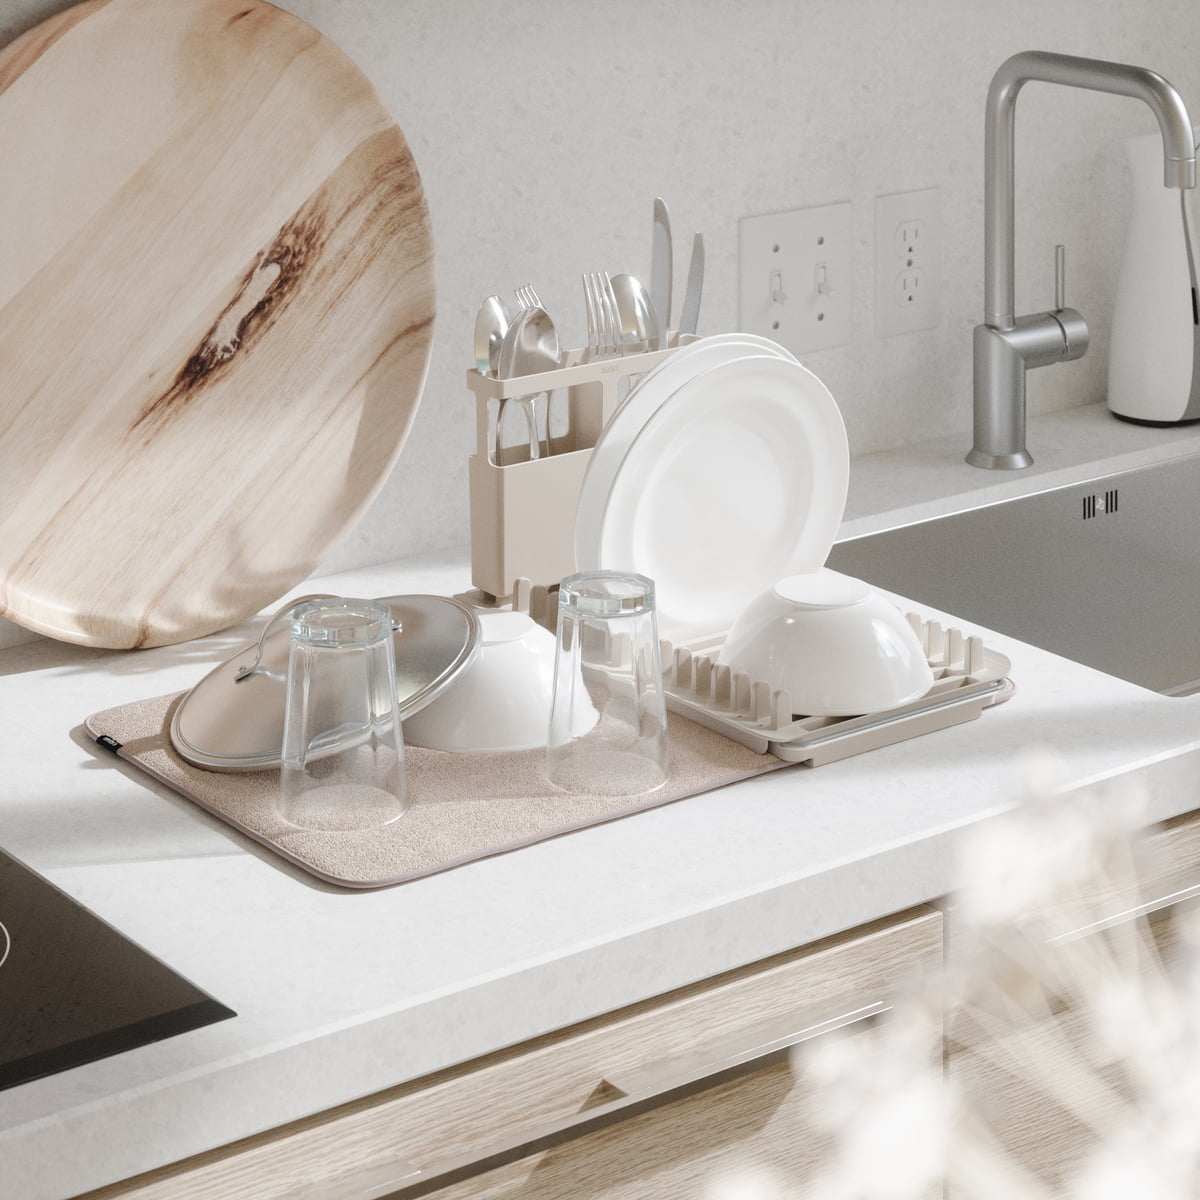 Umbra - Udry over the Sink Dish basket & Drying mat